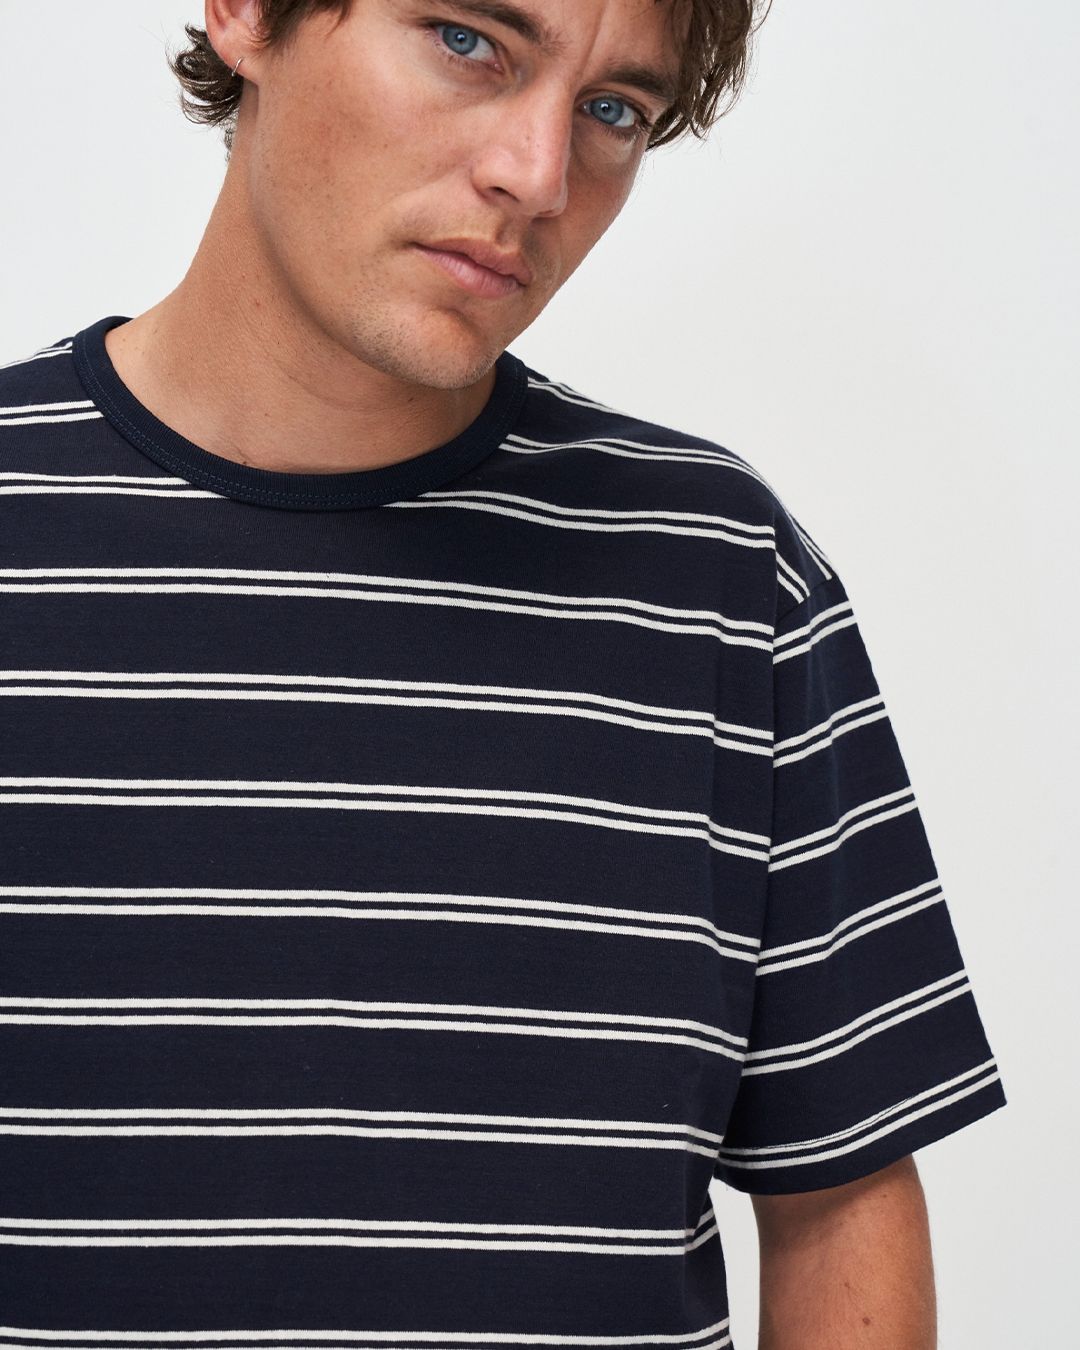 KuyichiLiam Striped T-Shirt Dark Navy